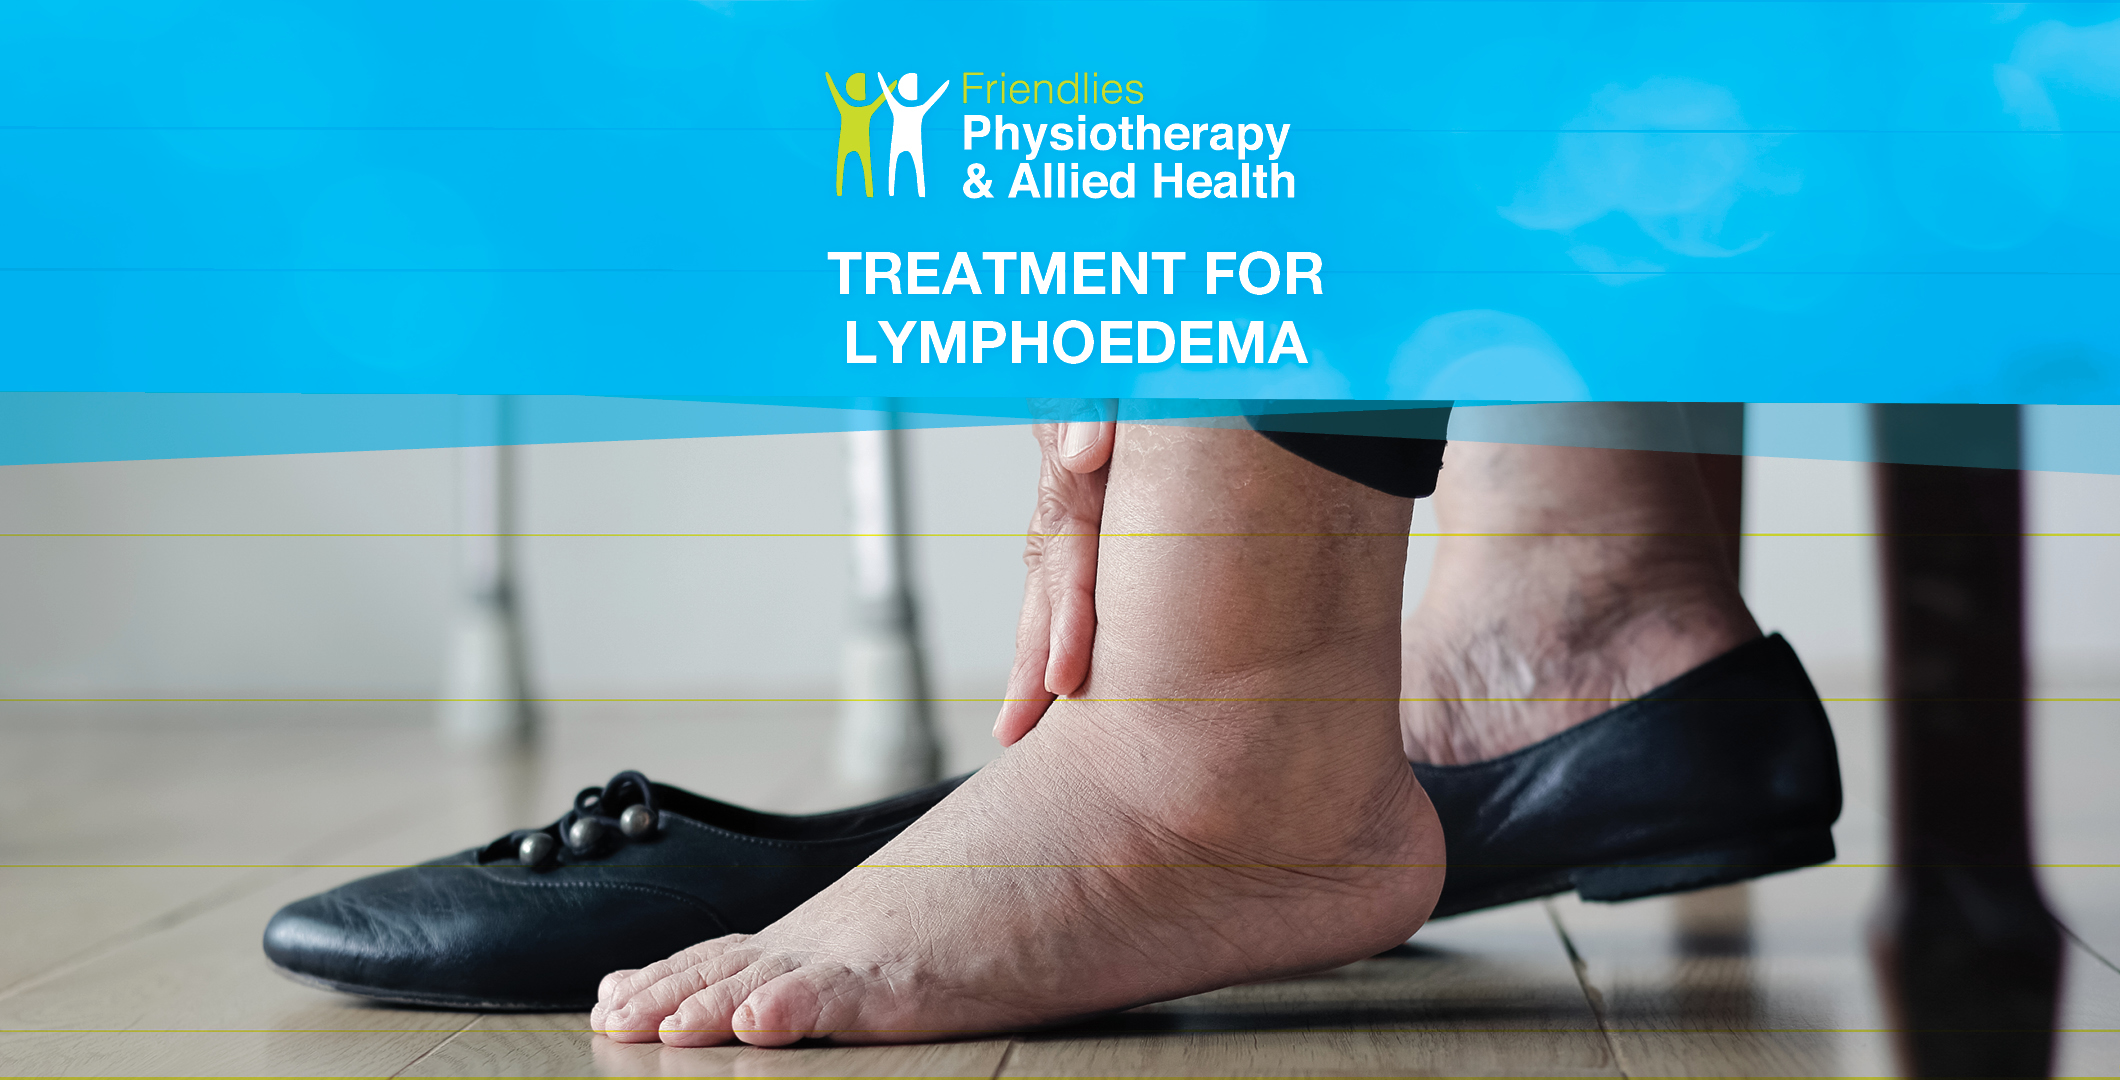 Treatment for lymphoedema